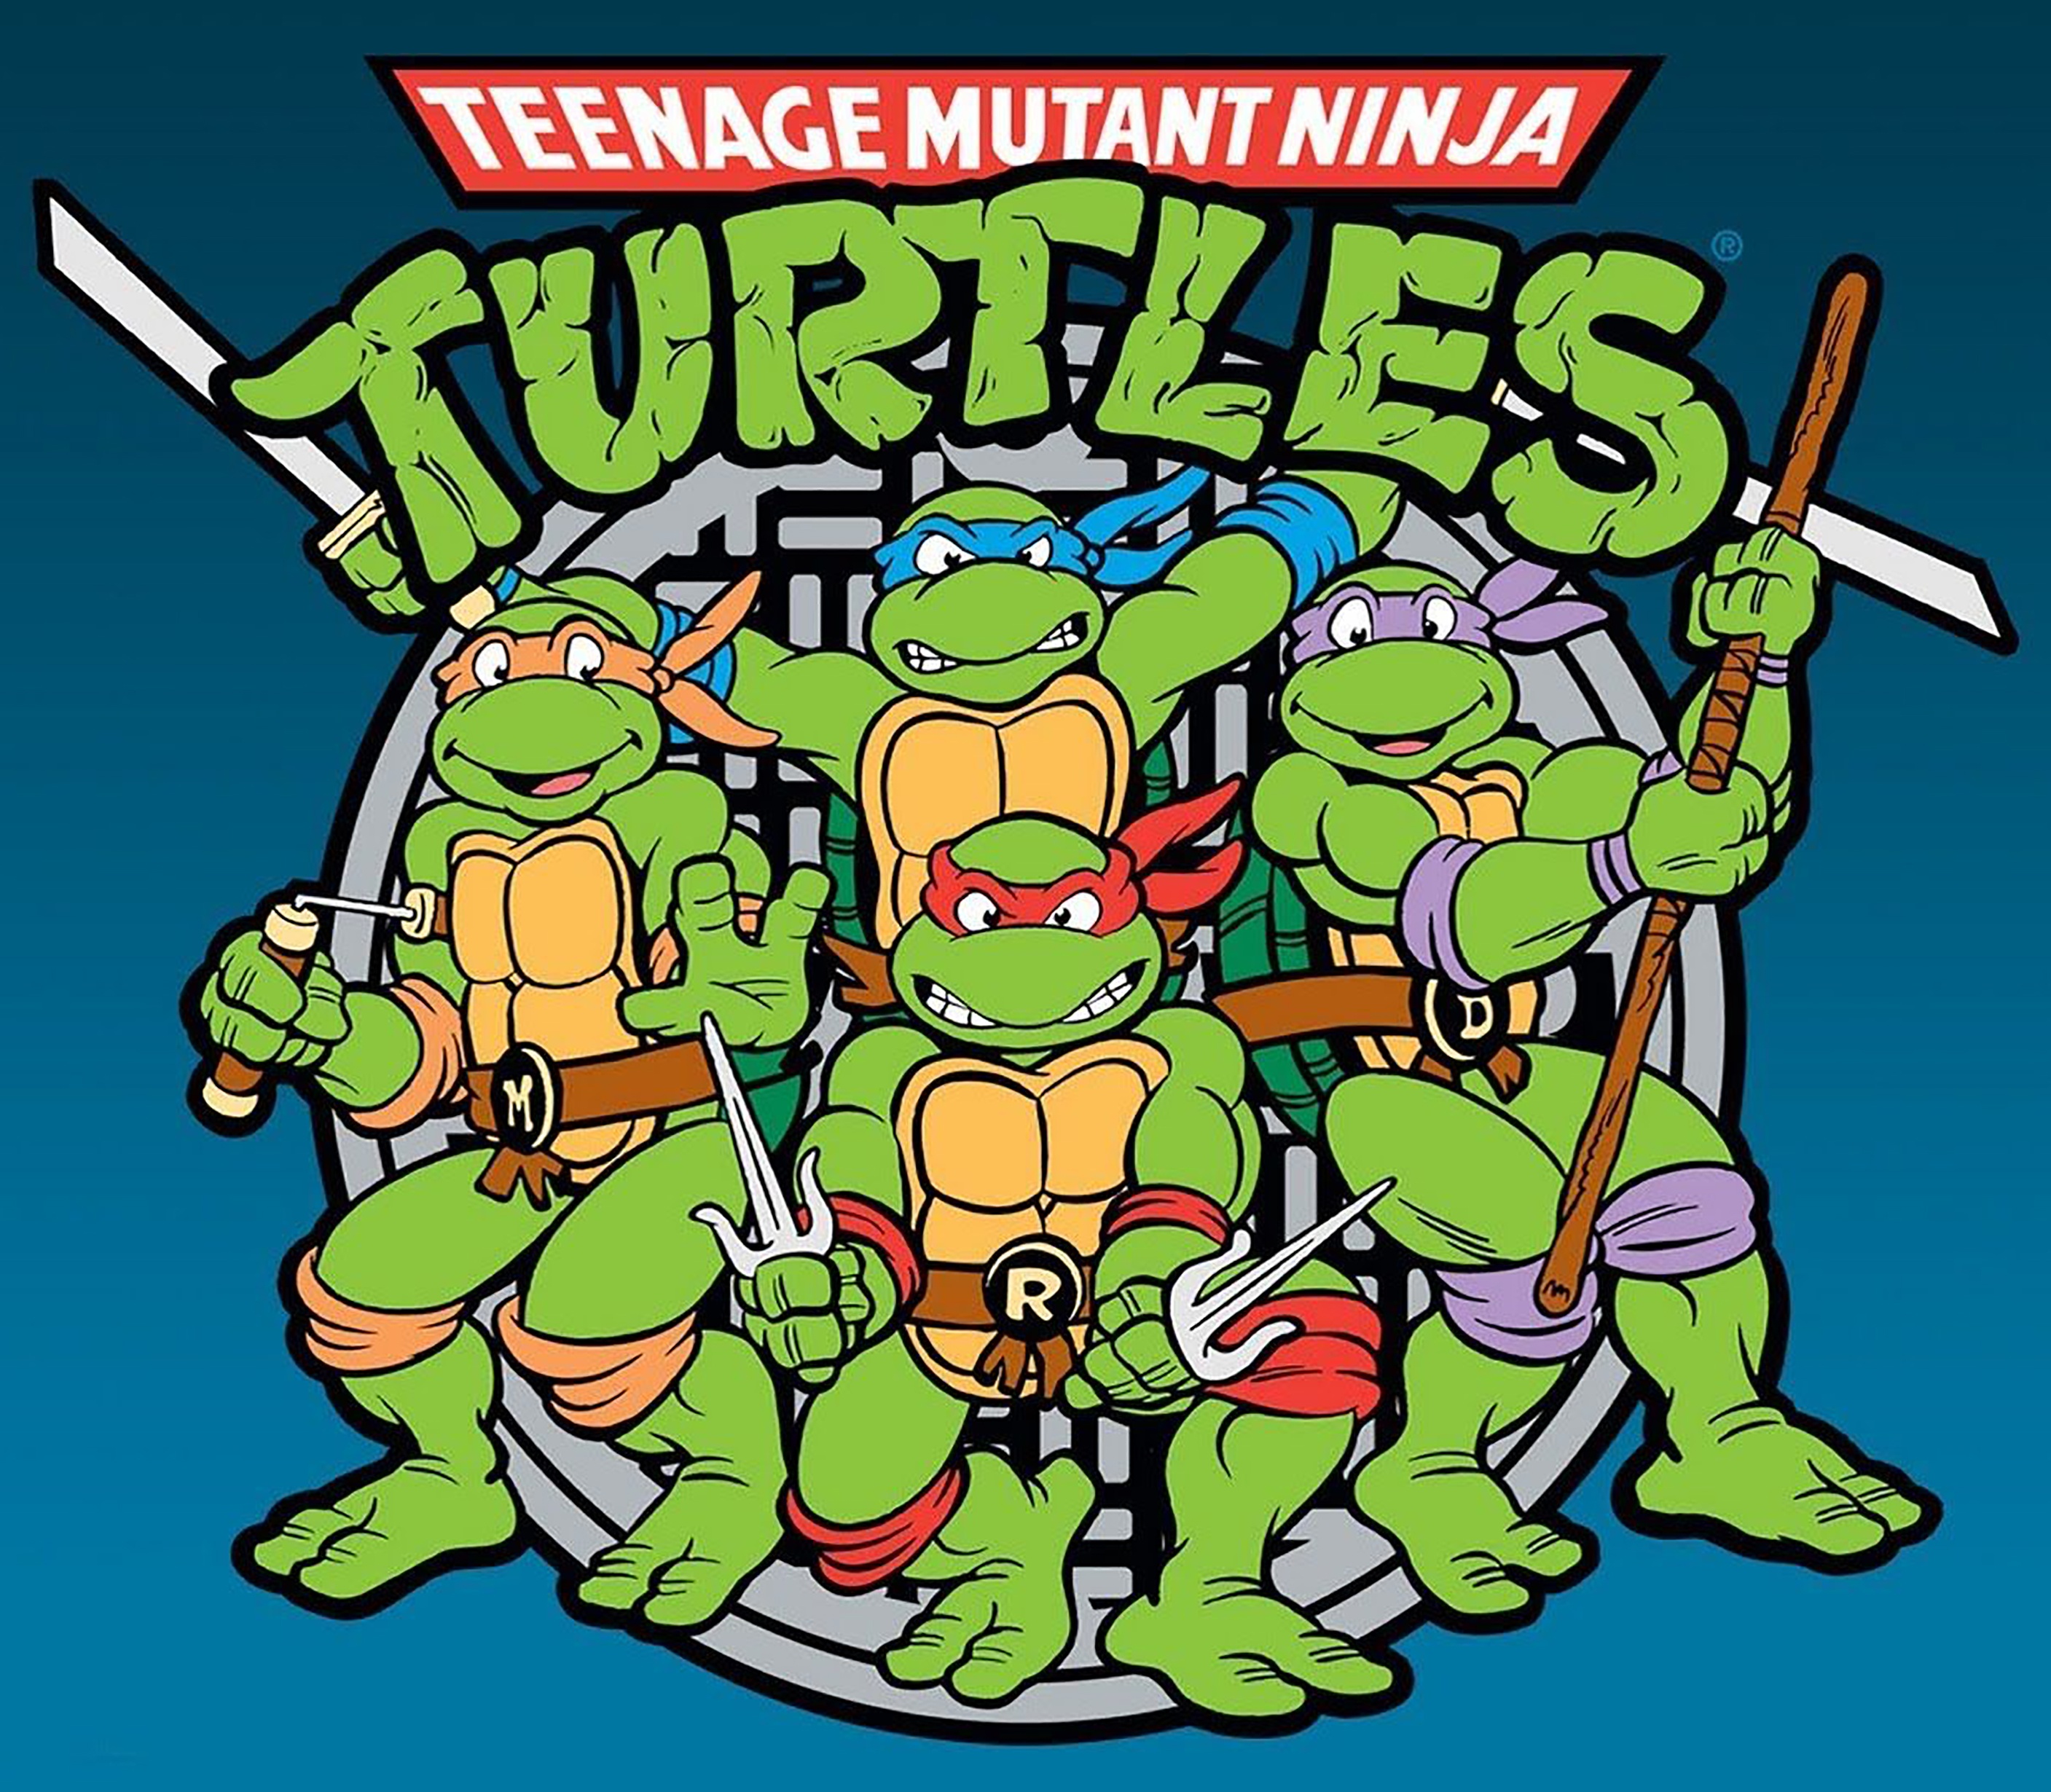 https://divinebovinity.org/wp-content/uploads/2021/07/teenage-ninja-turtles-1-1.jpg